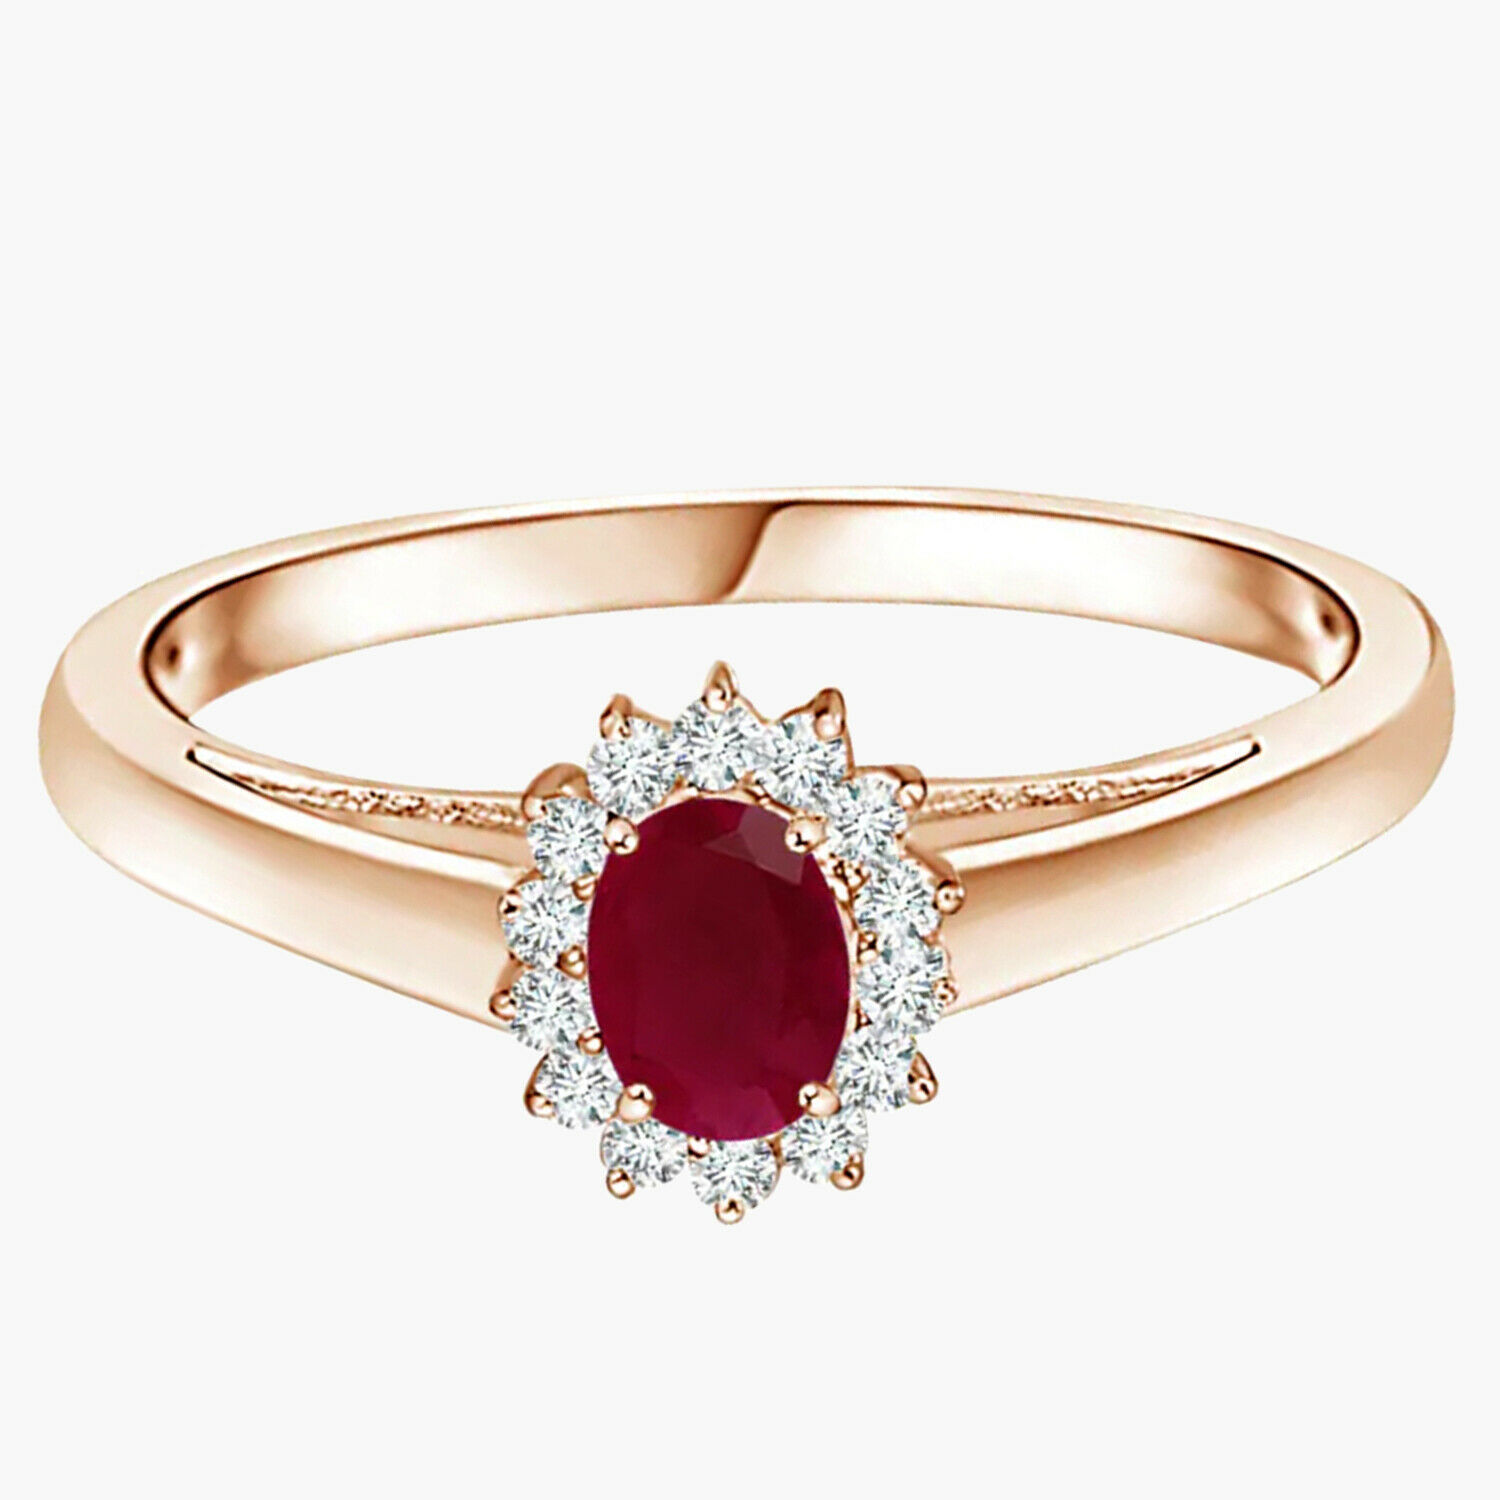 0.50 Cts Princess Diana Inspired Red Ruby Gemstone Ring 9k Rose Gold